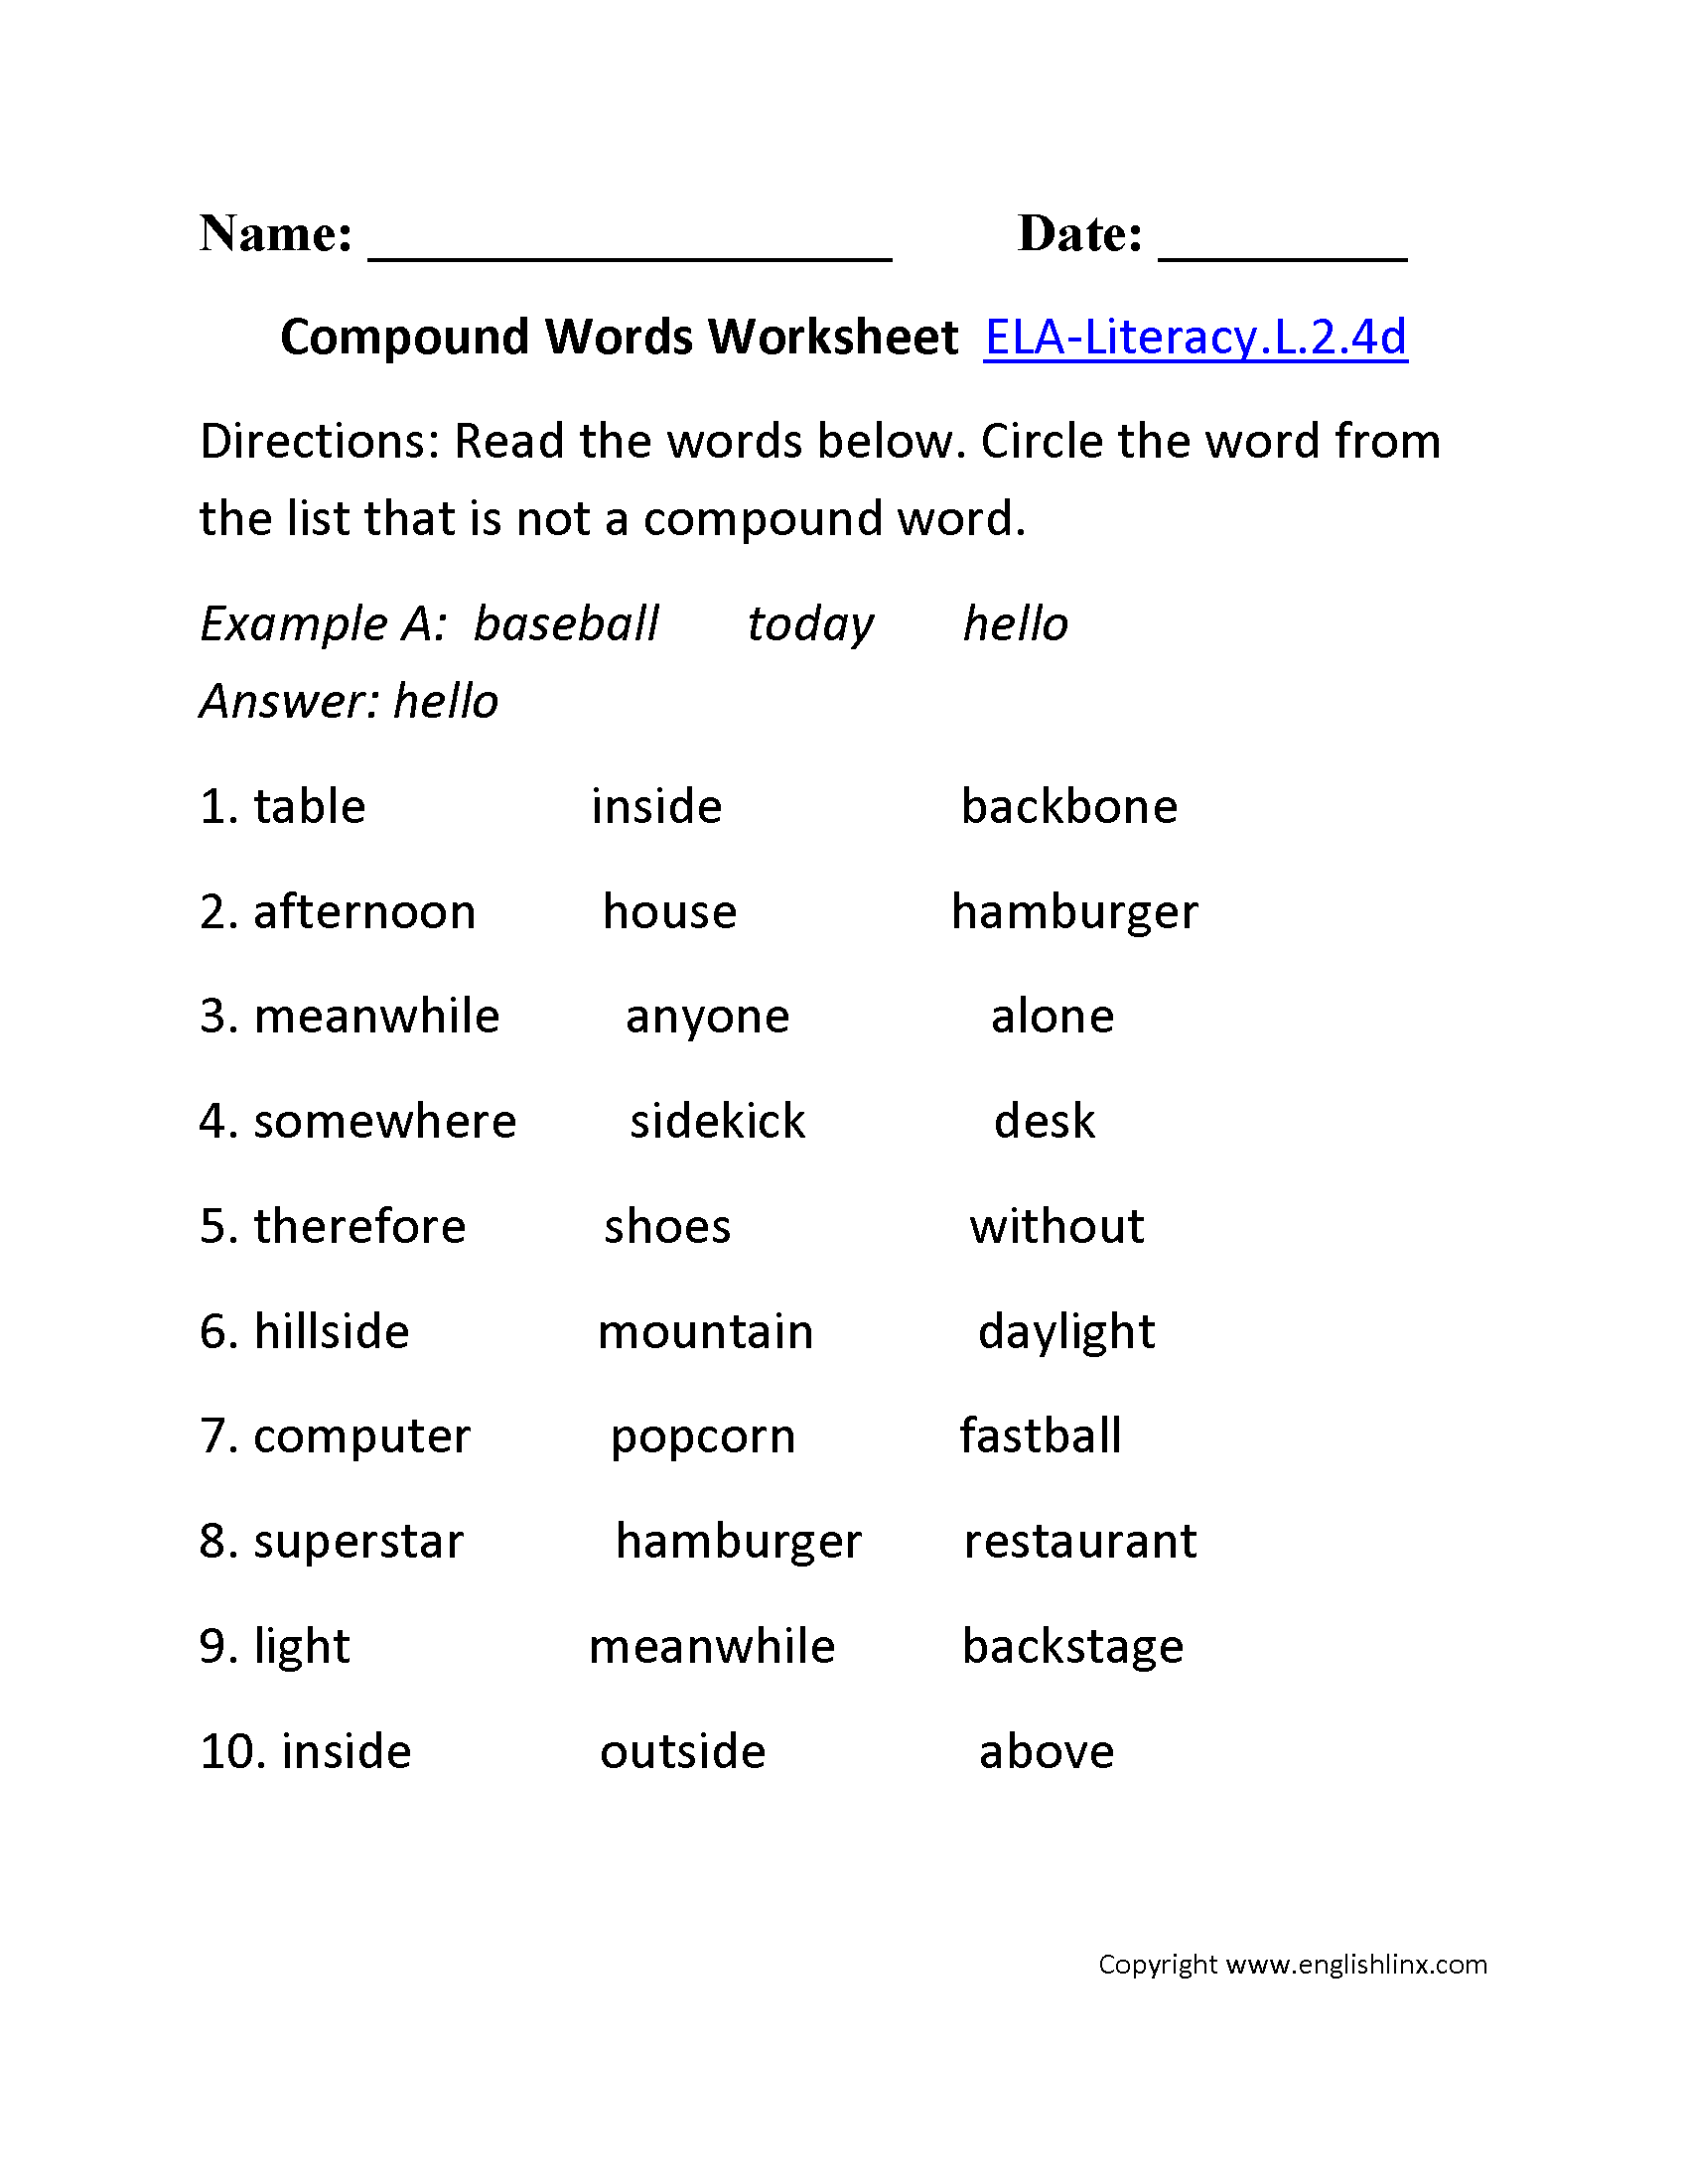 Compound Words 1 ELA-Literacy.L.2.4d Language Worksheet